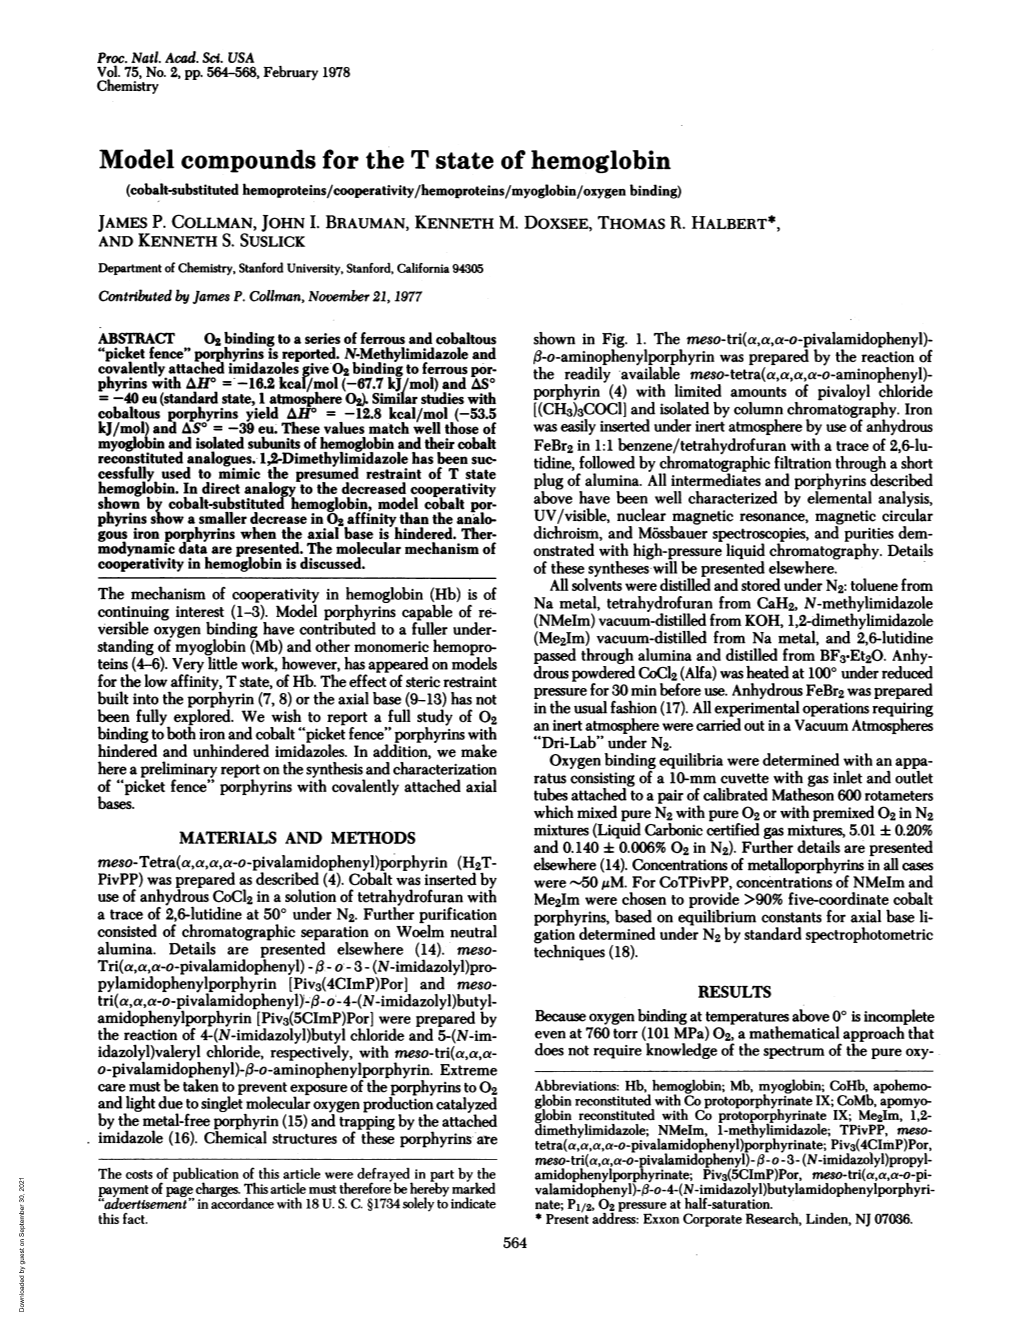 Model Compounds for the T State of Hemoglobin (Cobalt-Substituted Hemoproteins/Cooperativity/Hemoproteins/Myoglobin/Oxygen Binding) JAMES P